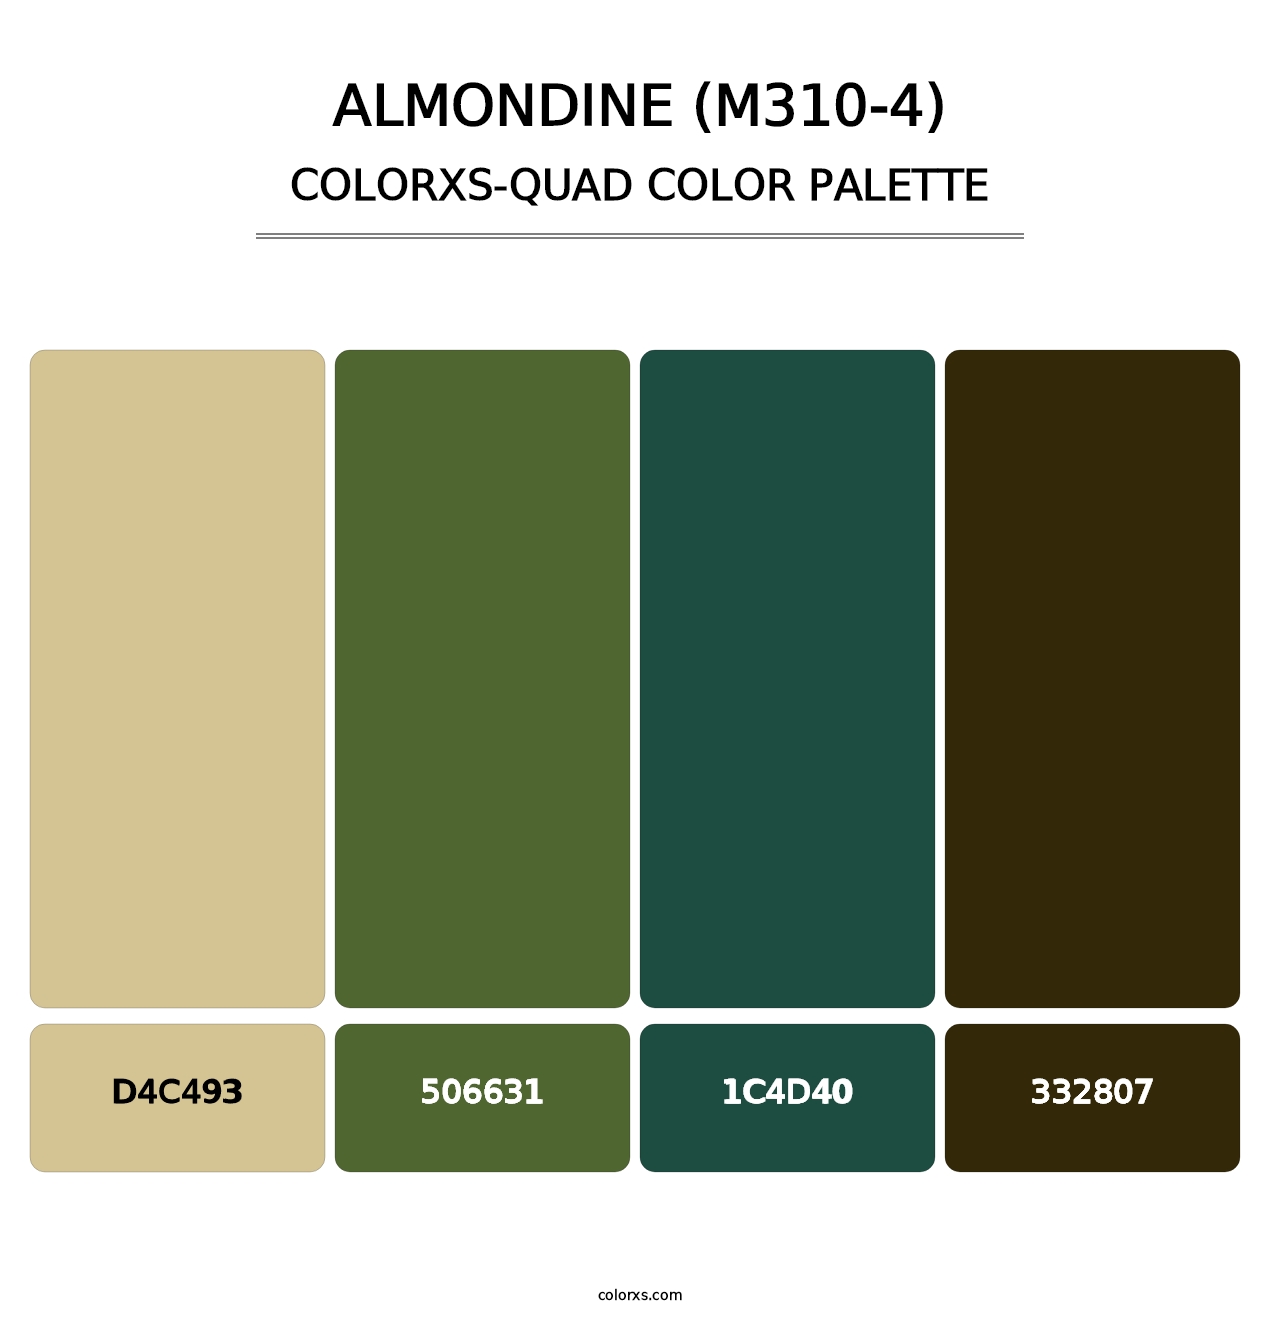 Almondine (M310-4) - Colorxs Quad Palette